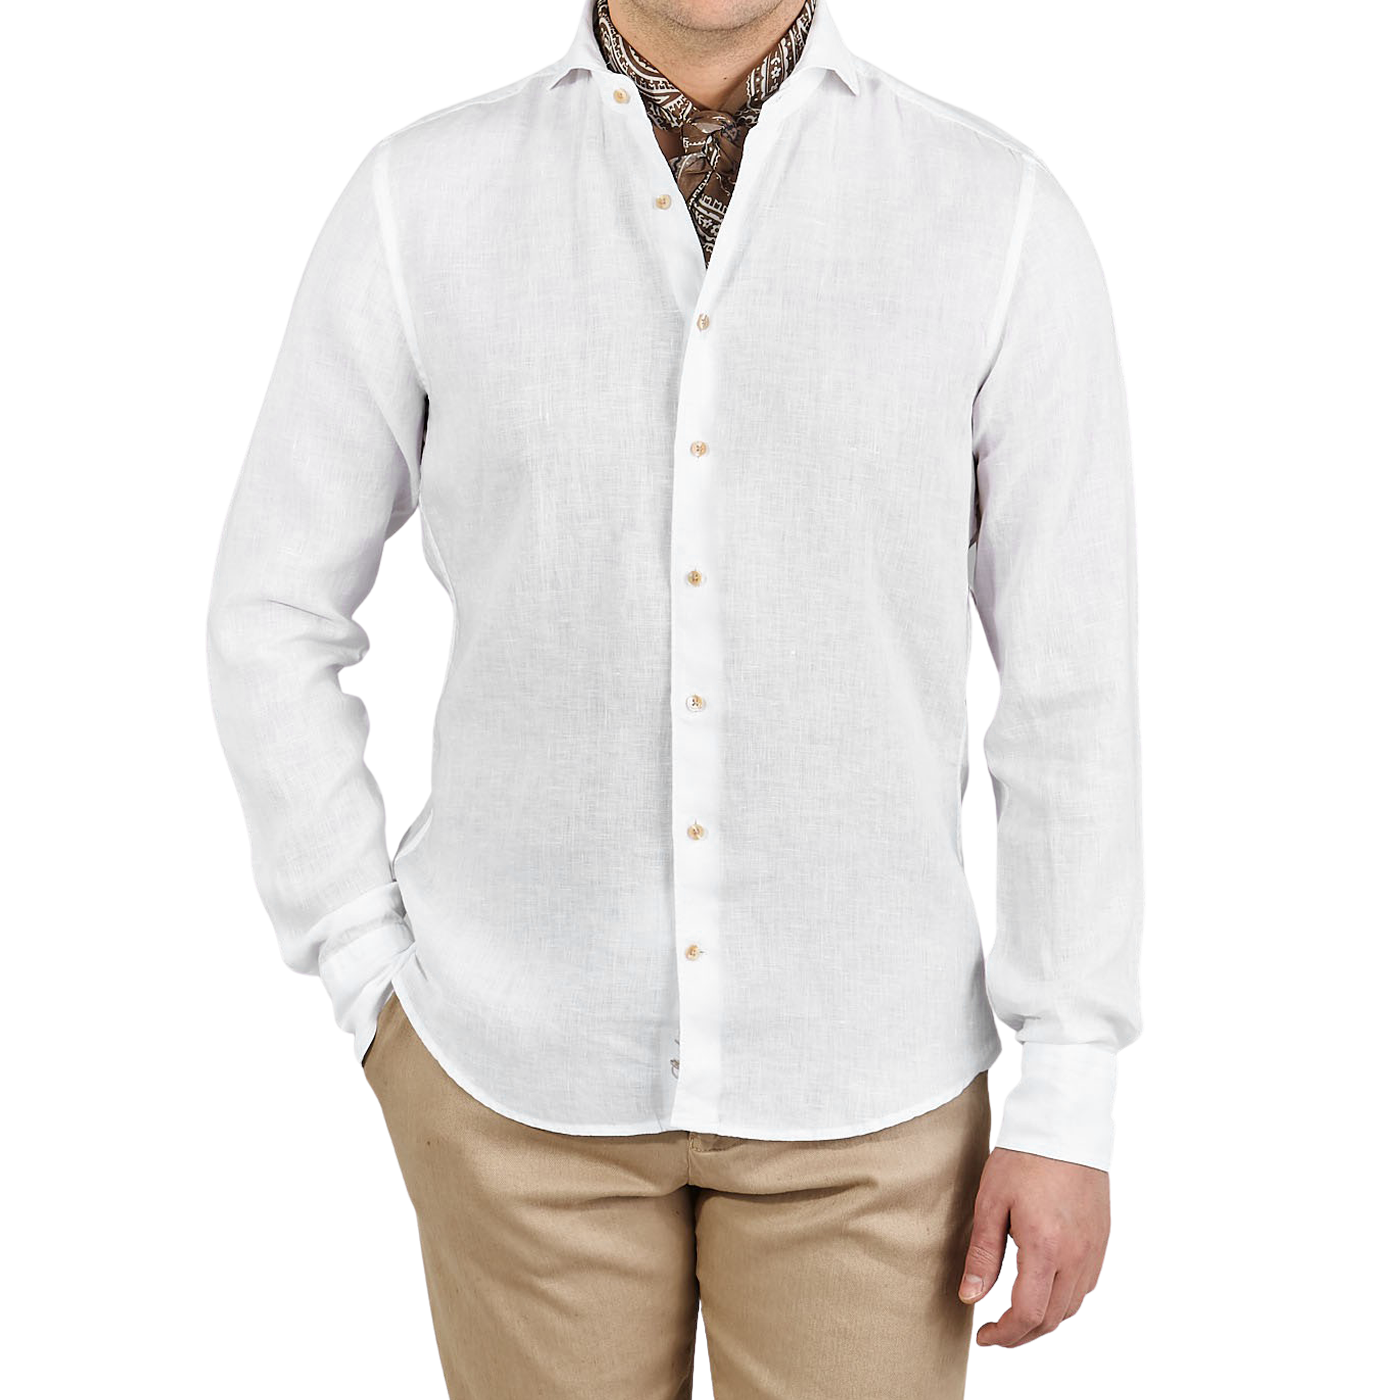 White Linen Shirt Transparent | peacecommission.kdsg.gov.ng